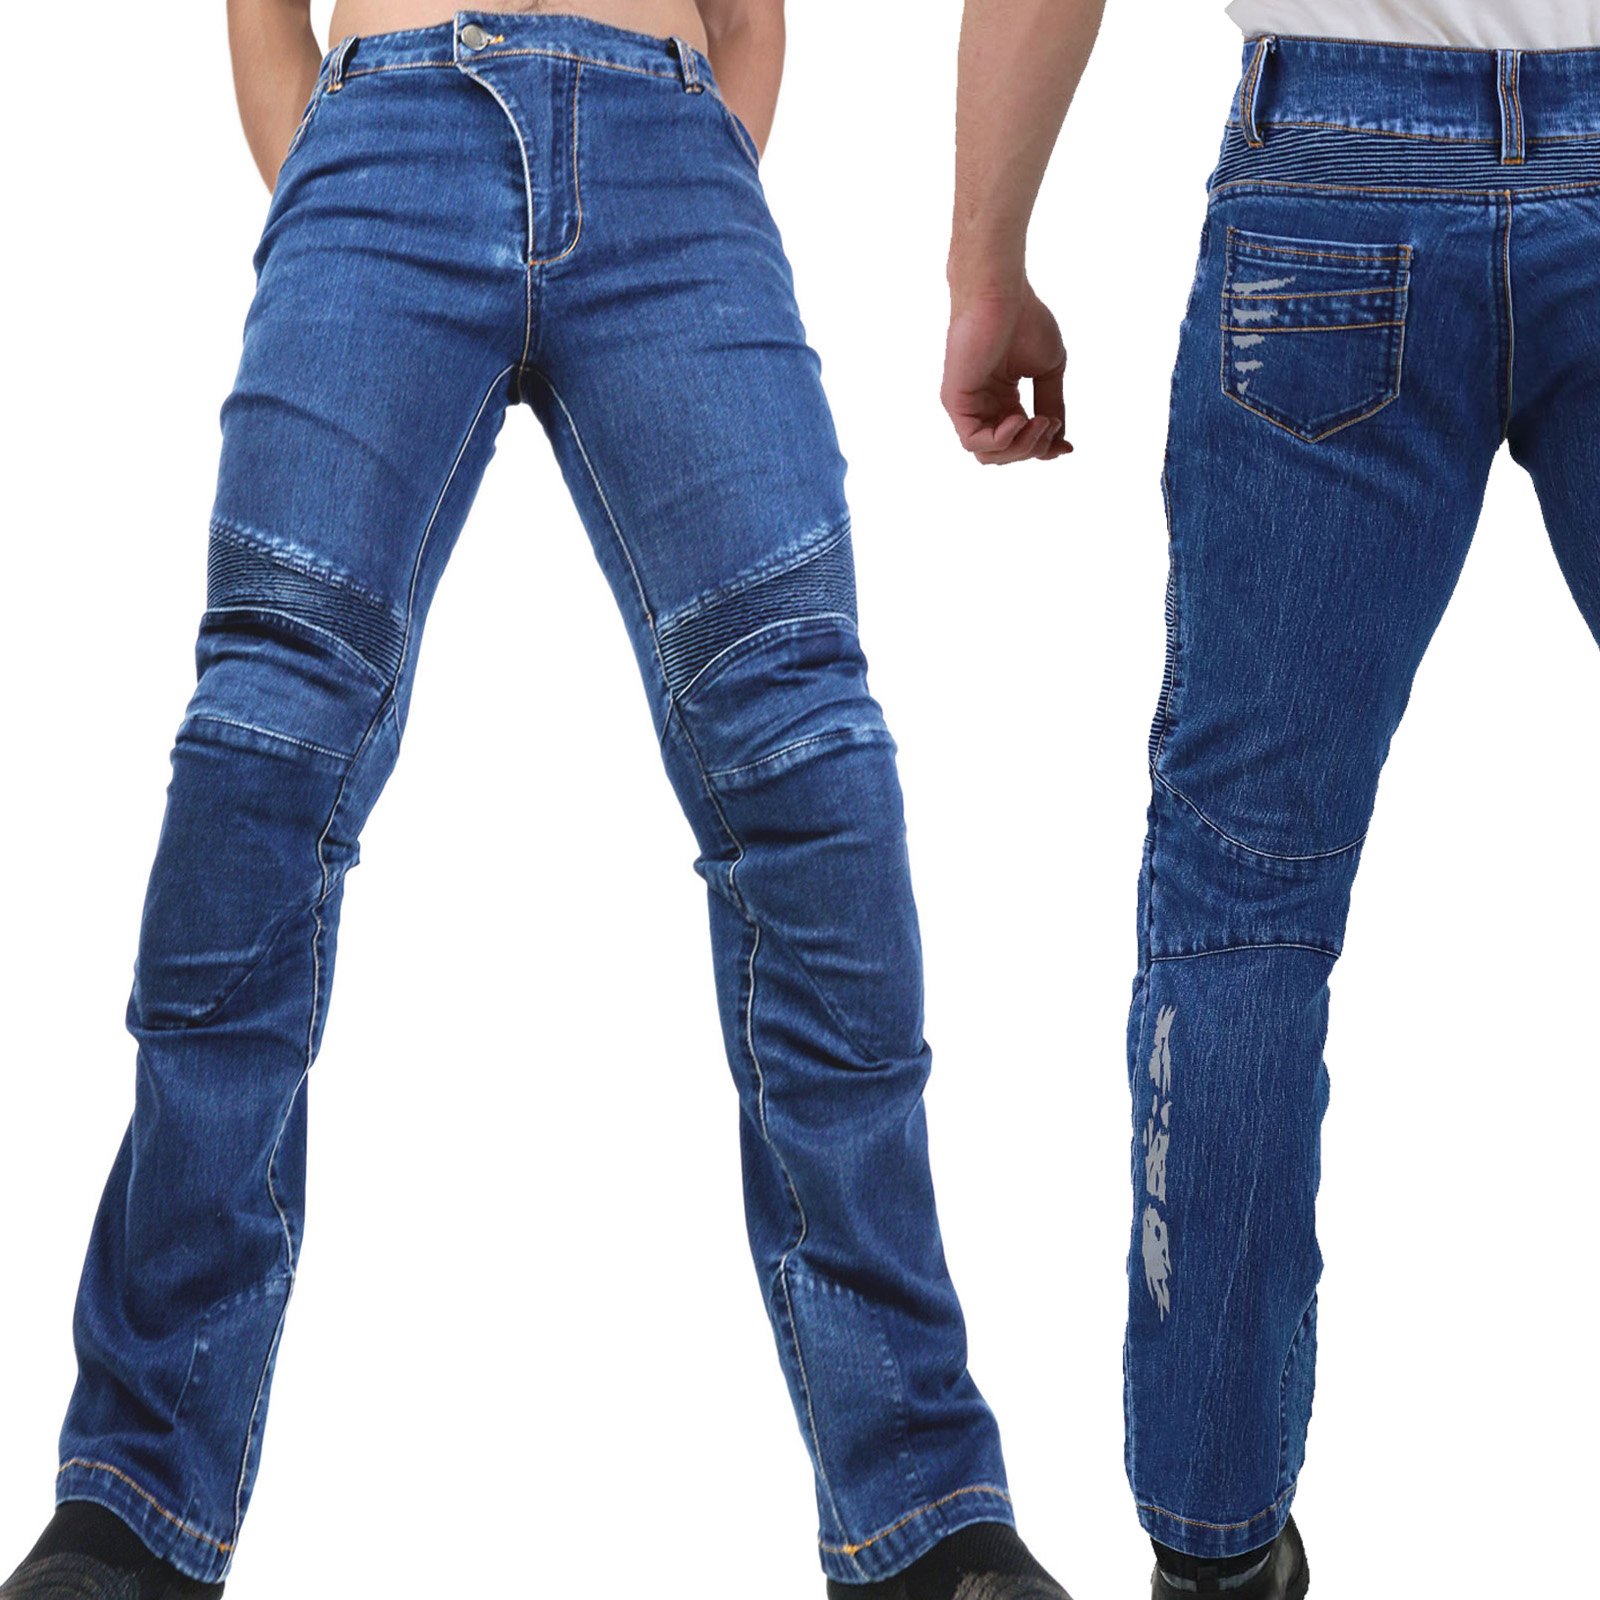 Motorradhose Jeans -Ranger- Leicht Dünn Herren Sommer Textil Jeanshose Slim Fit Motorrad Textilhose Männer Eng Stretch - blau - S